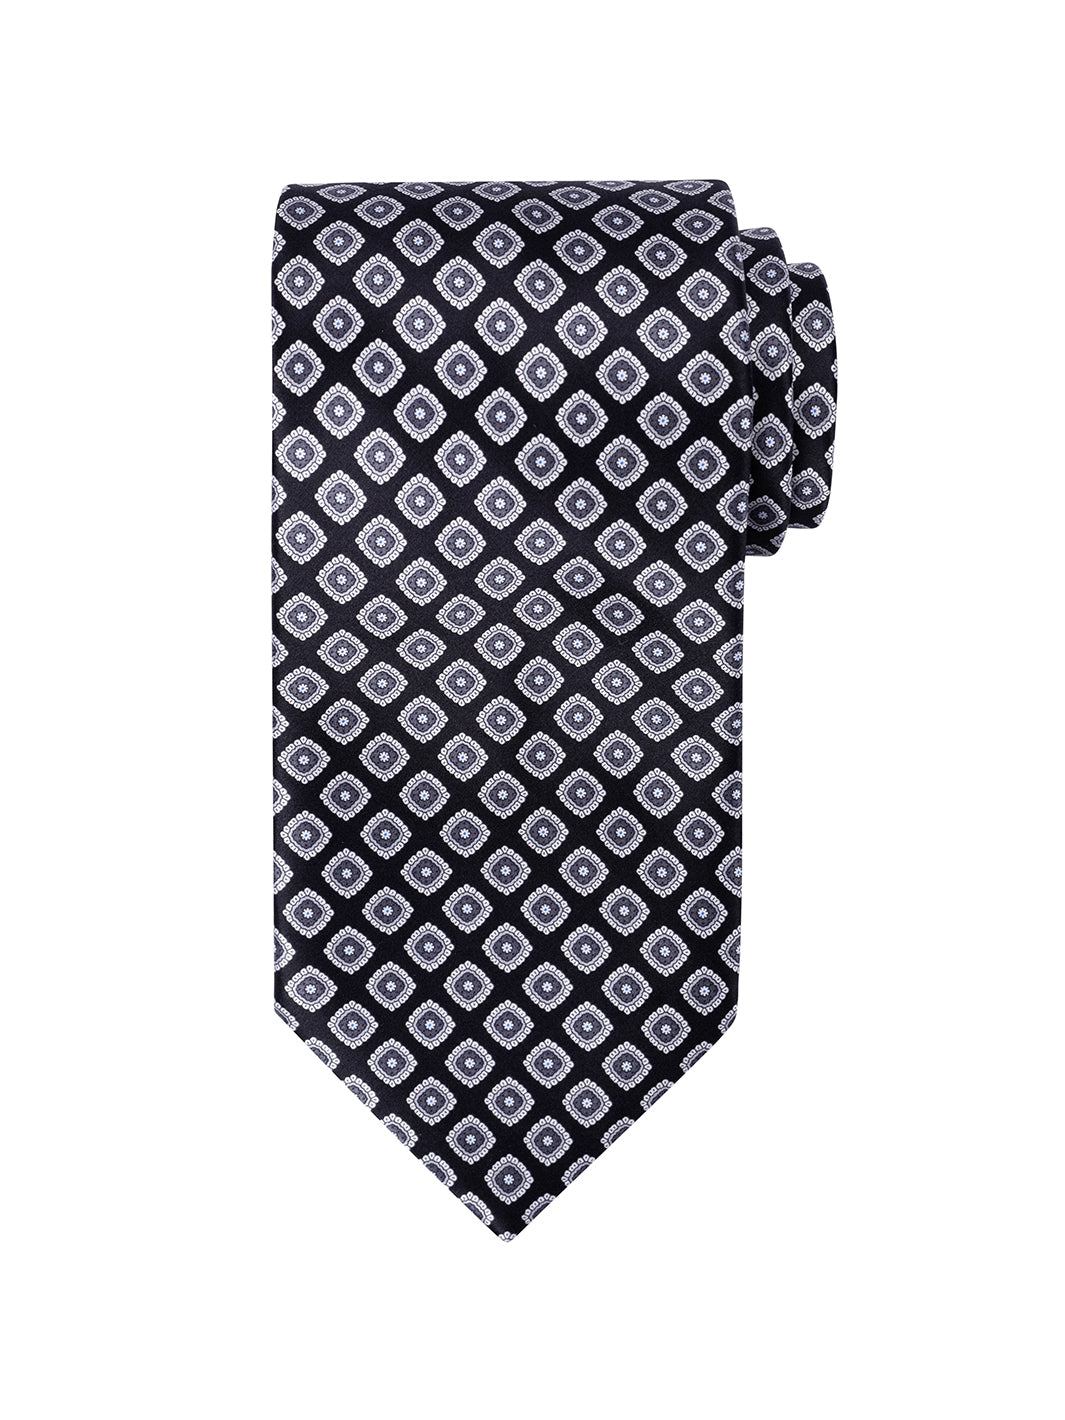 Stefano Ricci Black and Grey Tie